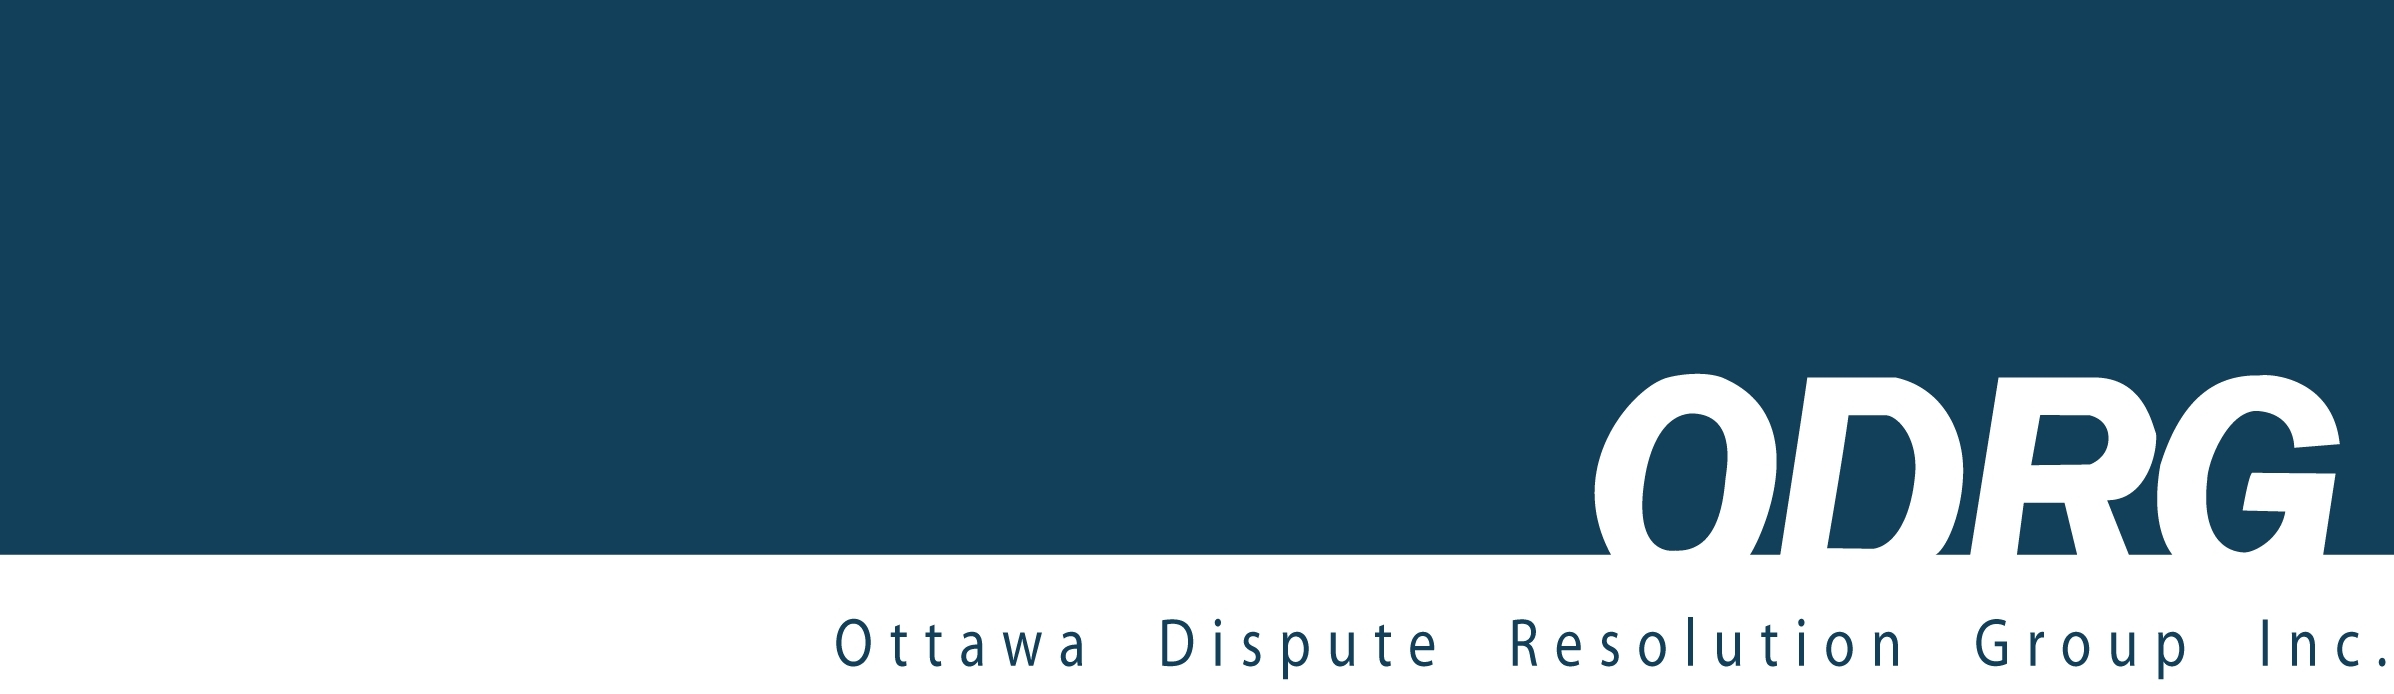 Ottawa Dispute Resolution Group, Inc